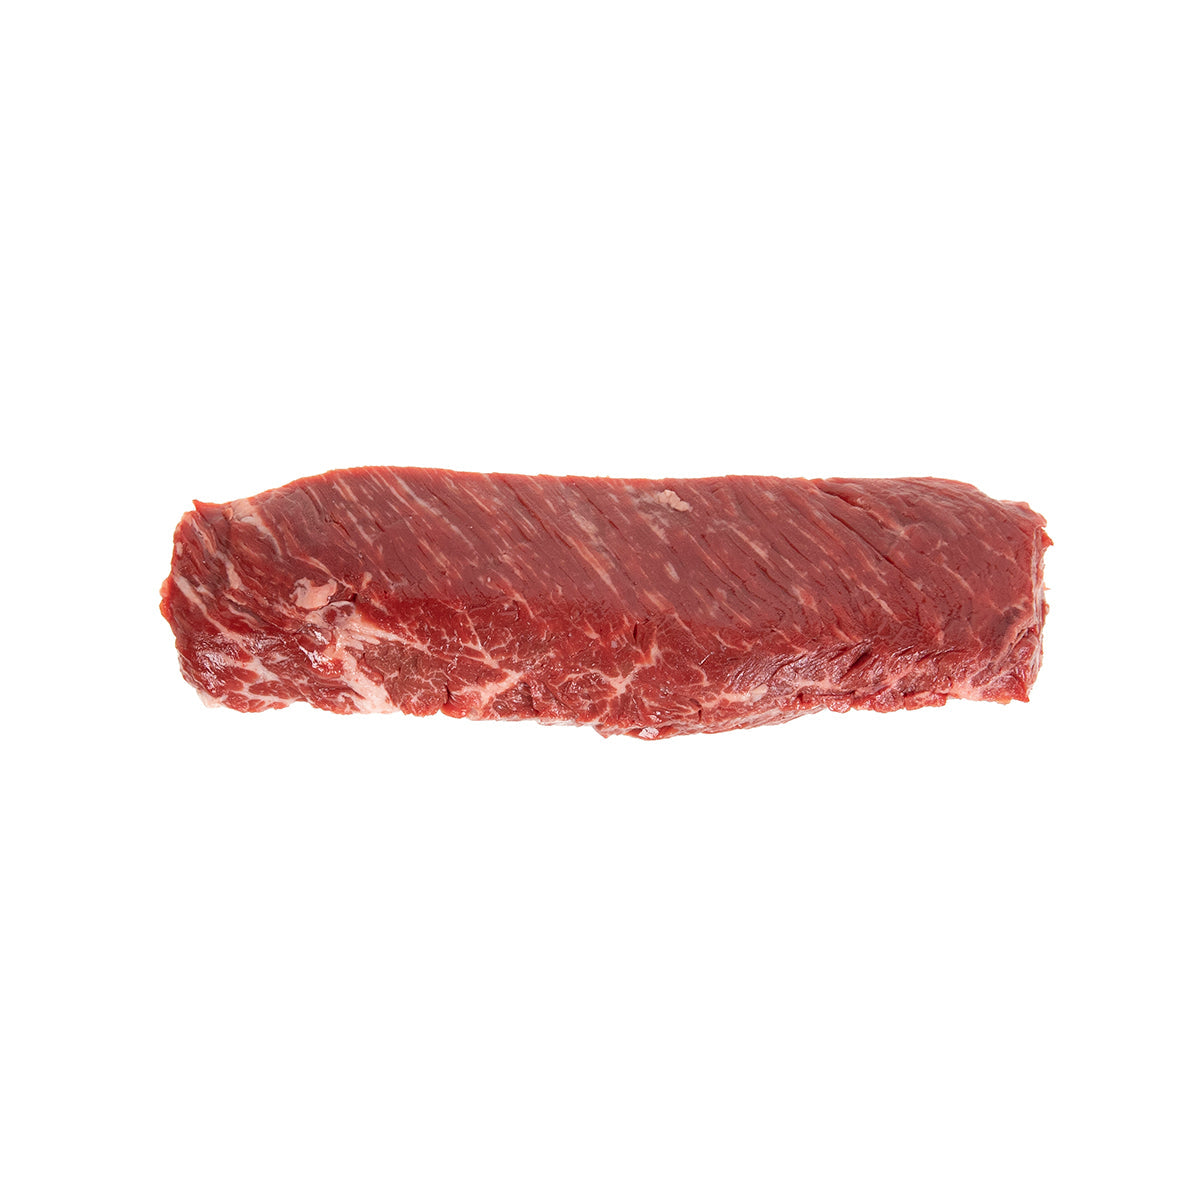 Prime Food Distributor (Pfd) Signature Beef Hanger Steaks 8 OZ